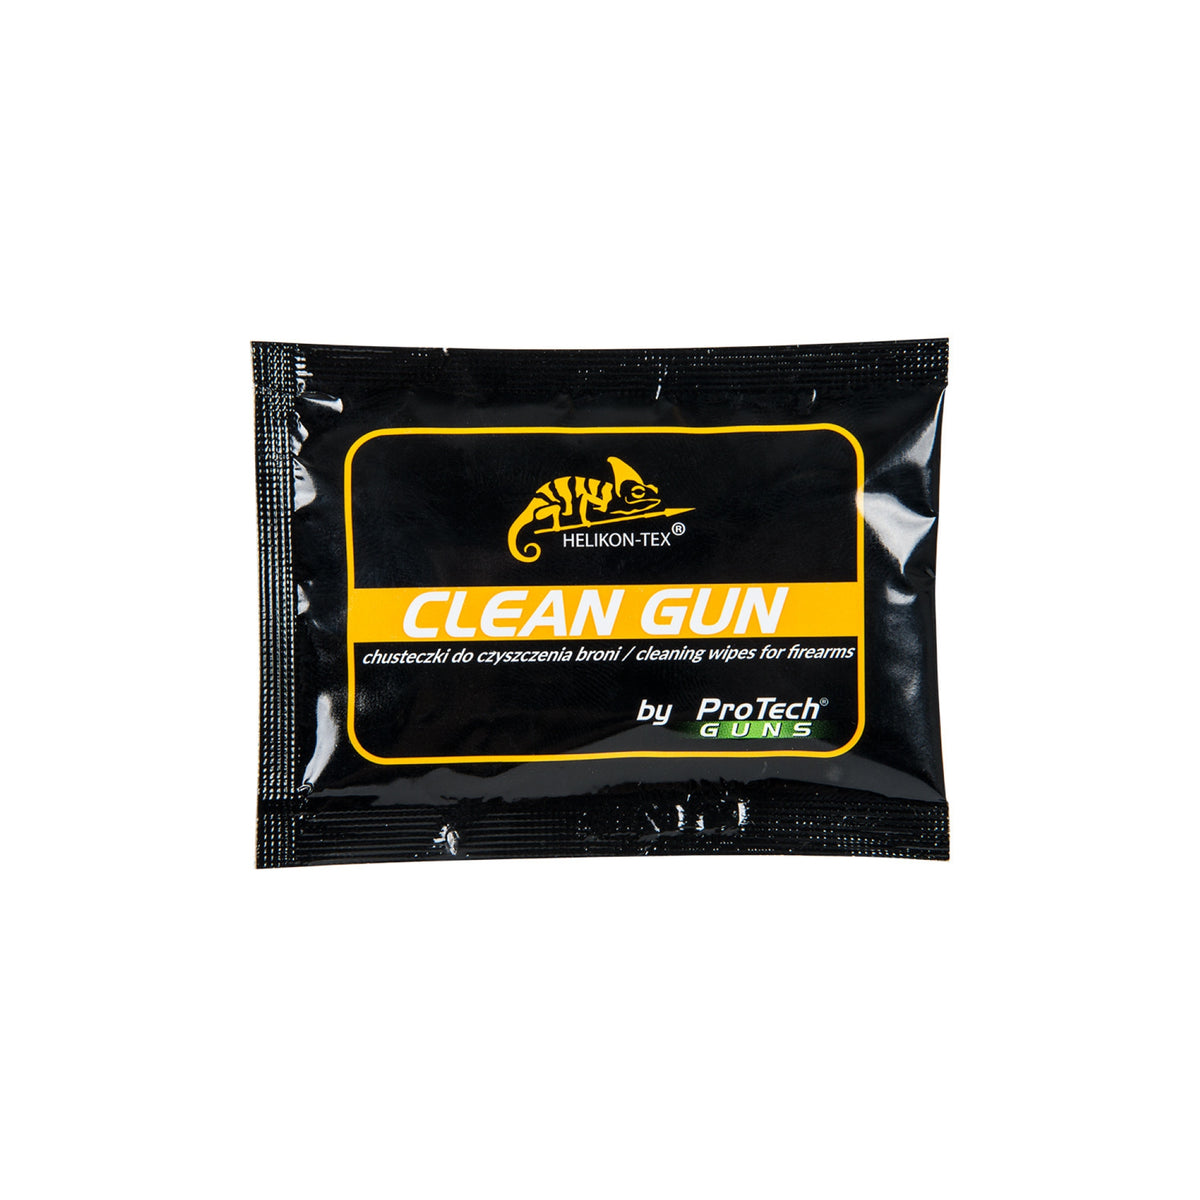 HELIKON-TEX | CLEAN GUN WEAPON CLEANING WIPES - Salviette per la pulizia delle armi